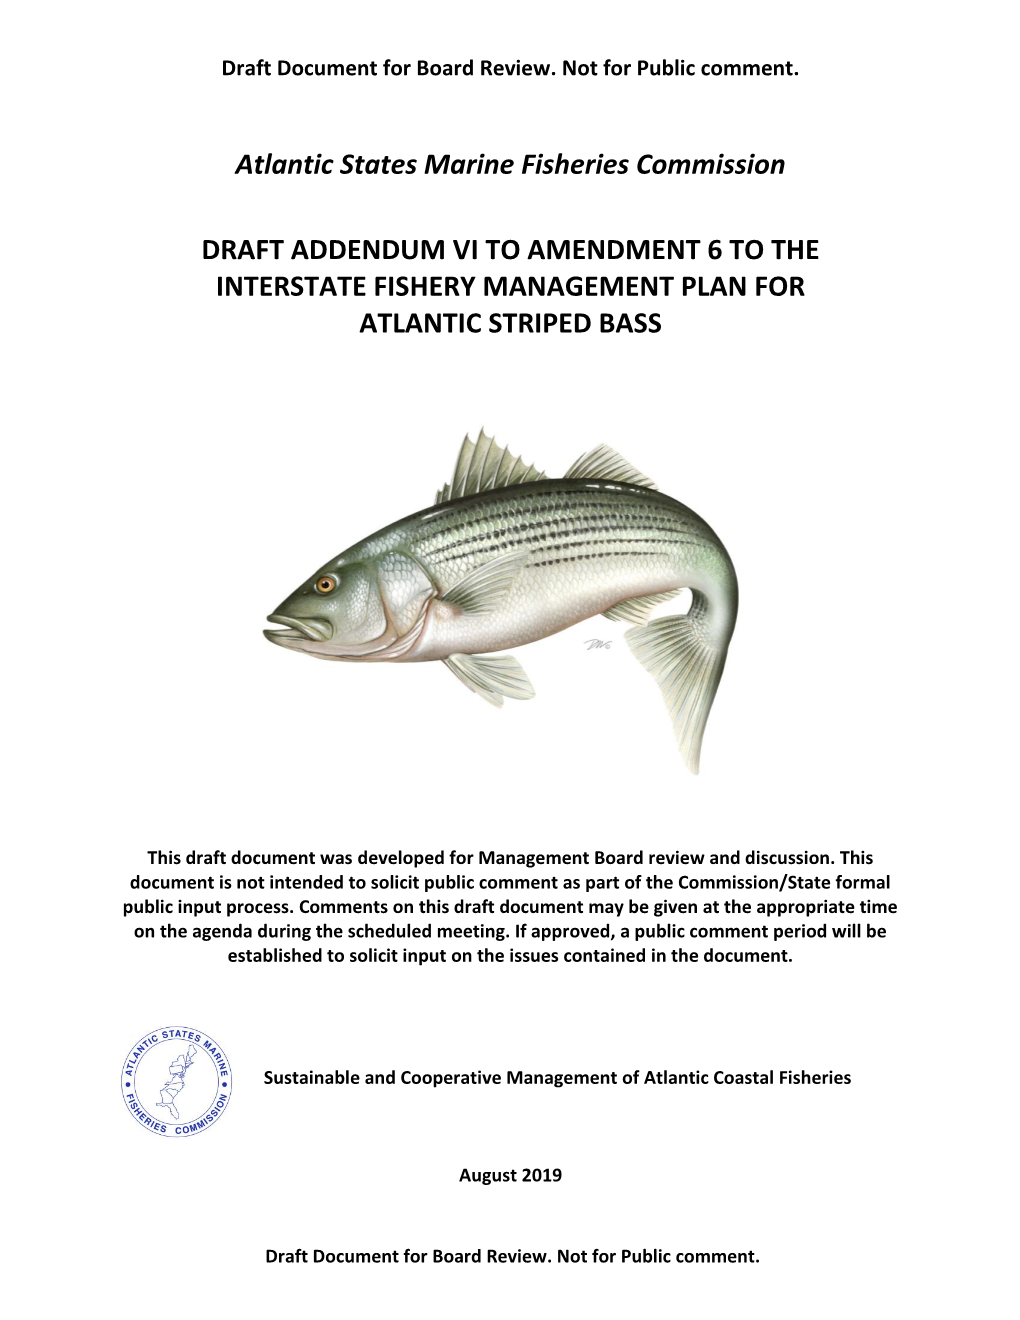 Atlantic States Marine Fisheries Commission DRAFT ADDENDUM